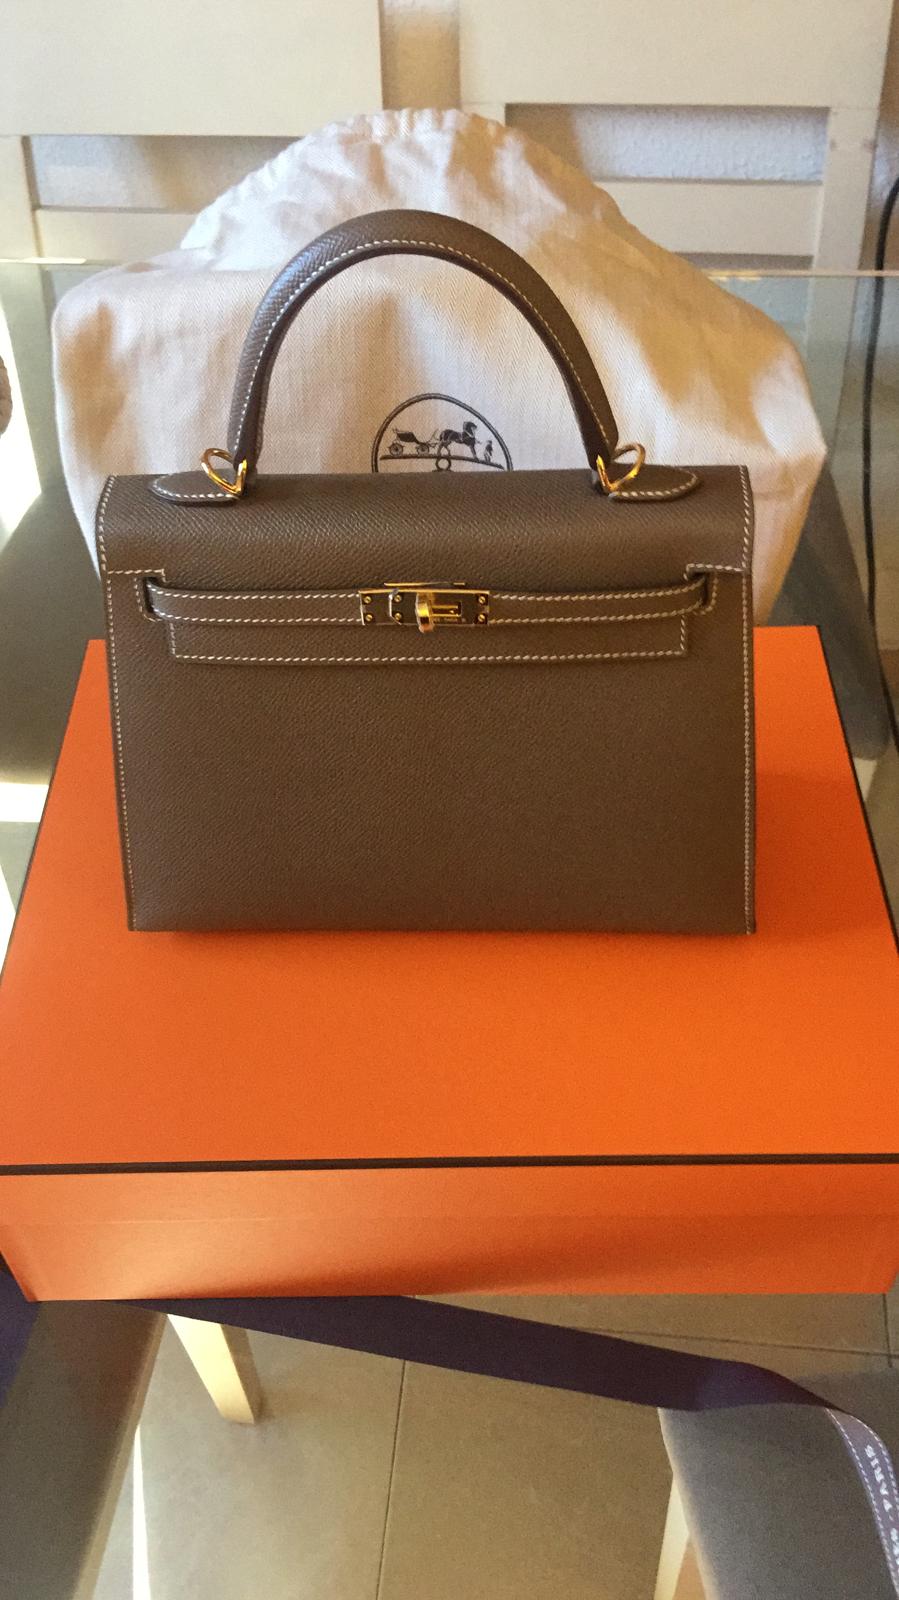 Hermes Etoupe Kelly 25 bag with gold hardware - HERMÈS